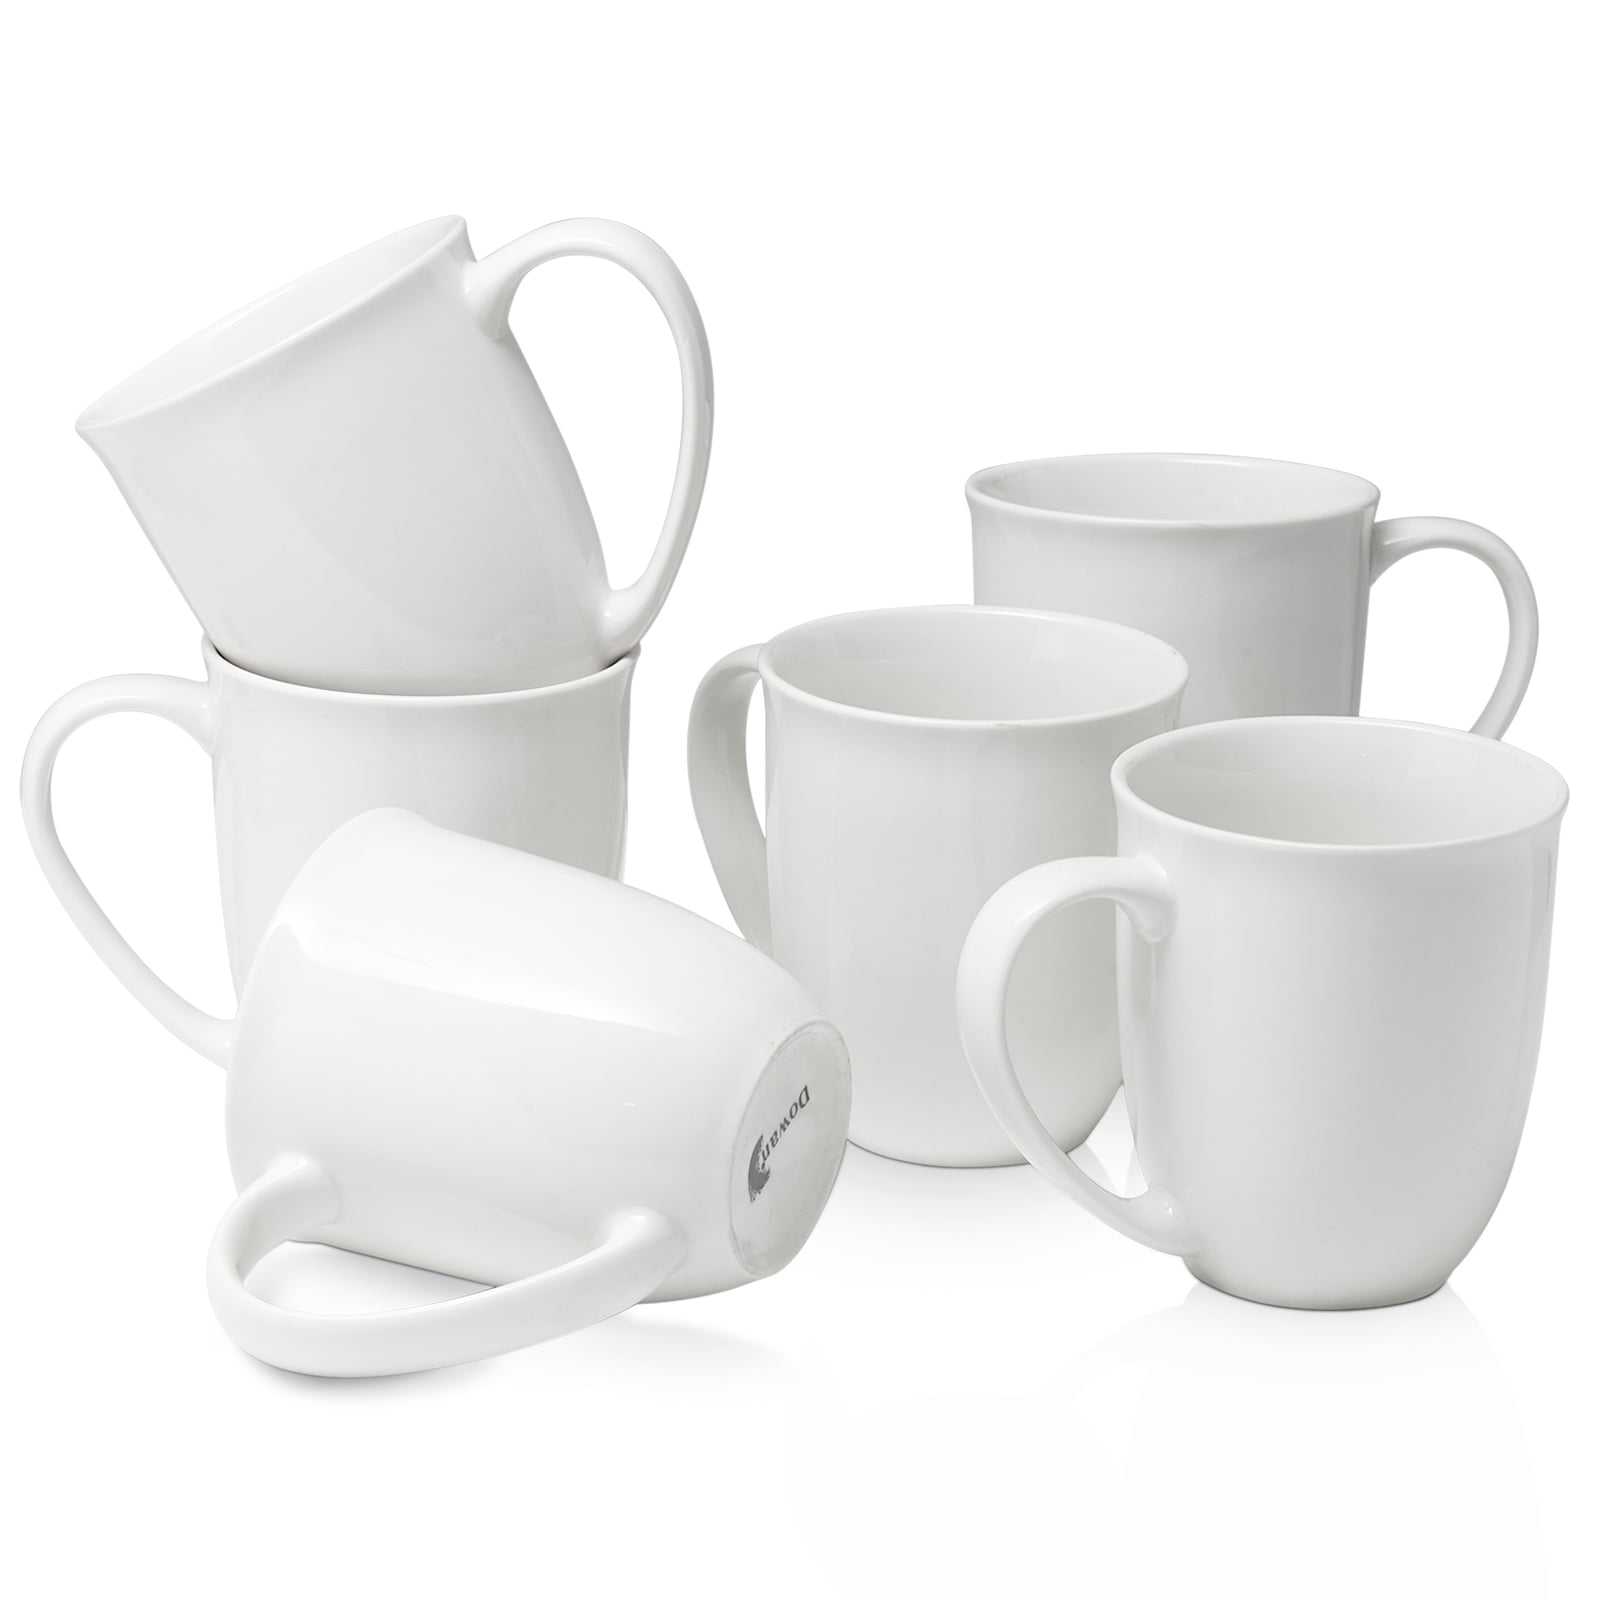  Rockin Coffee Mug Set 4 Mug - 10 Ounce Mugs Porcelain White Mug  - Gift Boxed a great marriage or couples Gift Set, Kitchen Decor Cup Sets  BPA Free Microwave Safe